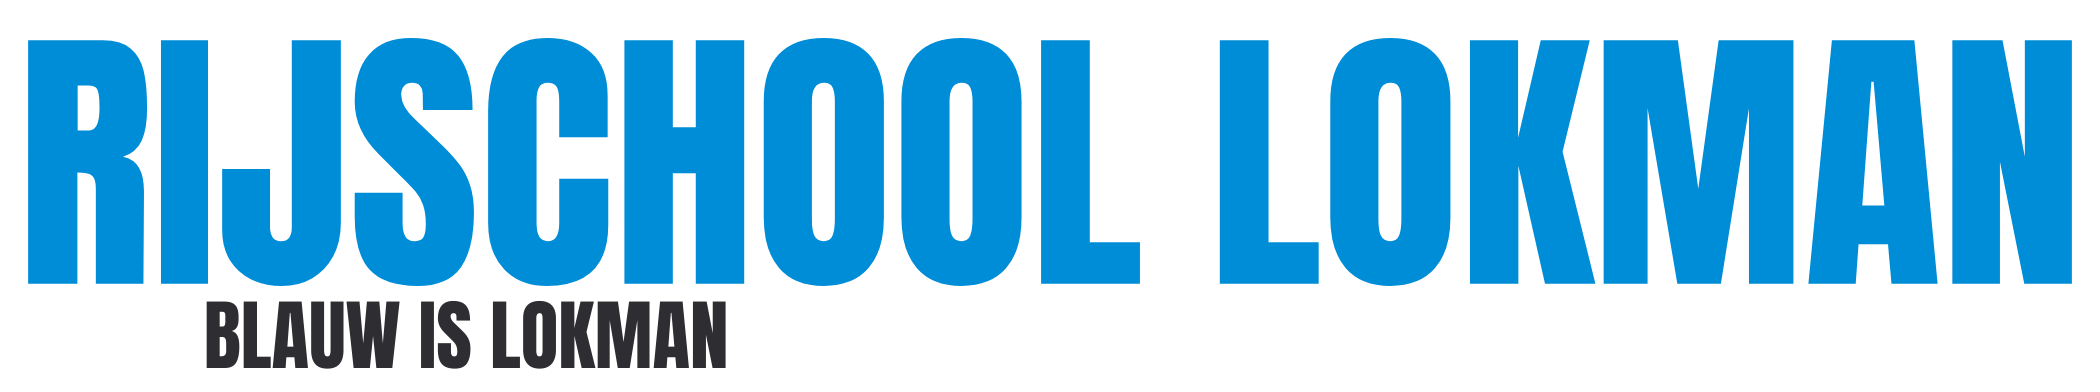 Rijschool in Haarlem en omgeving footer logo